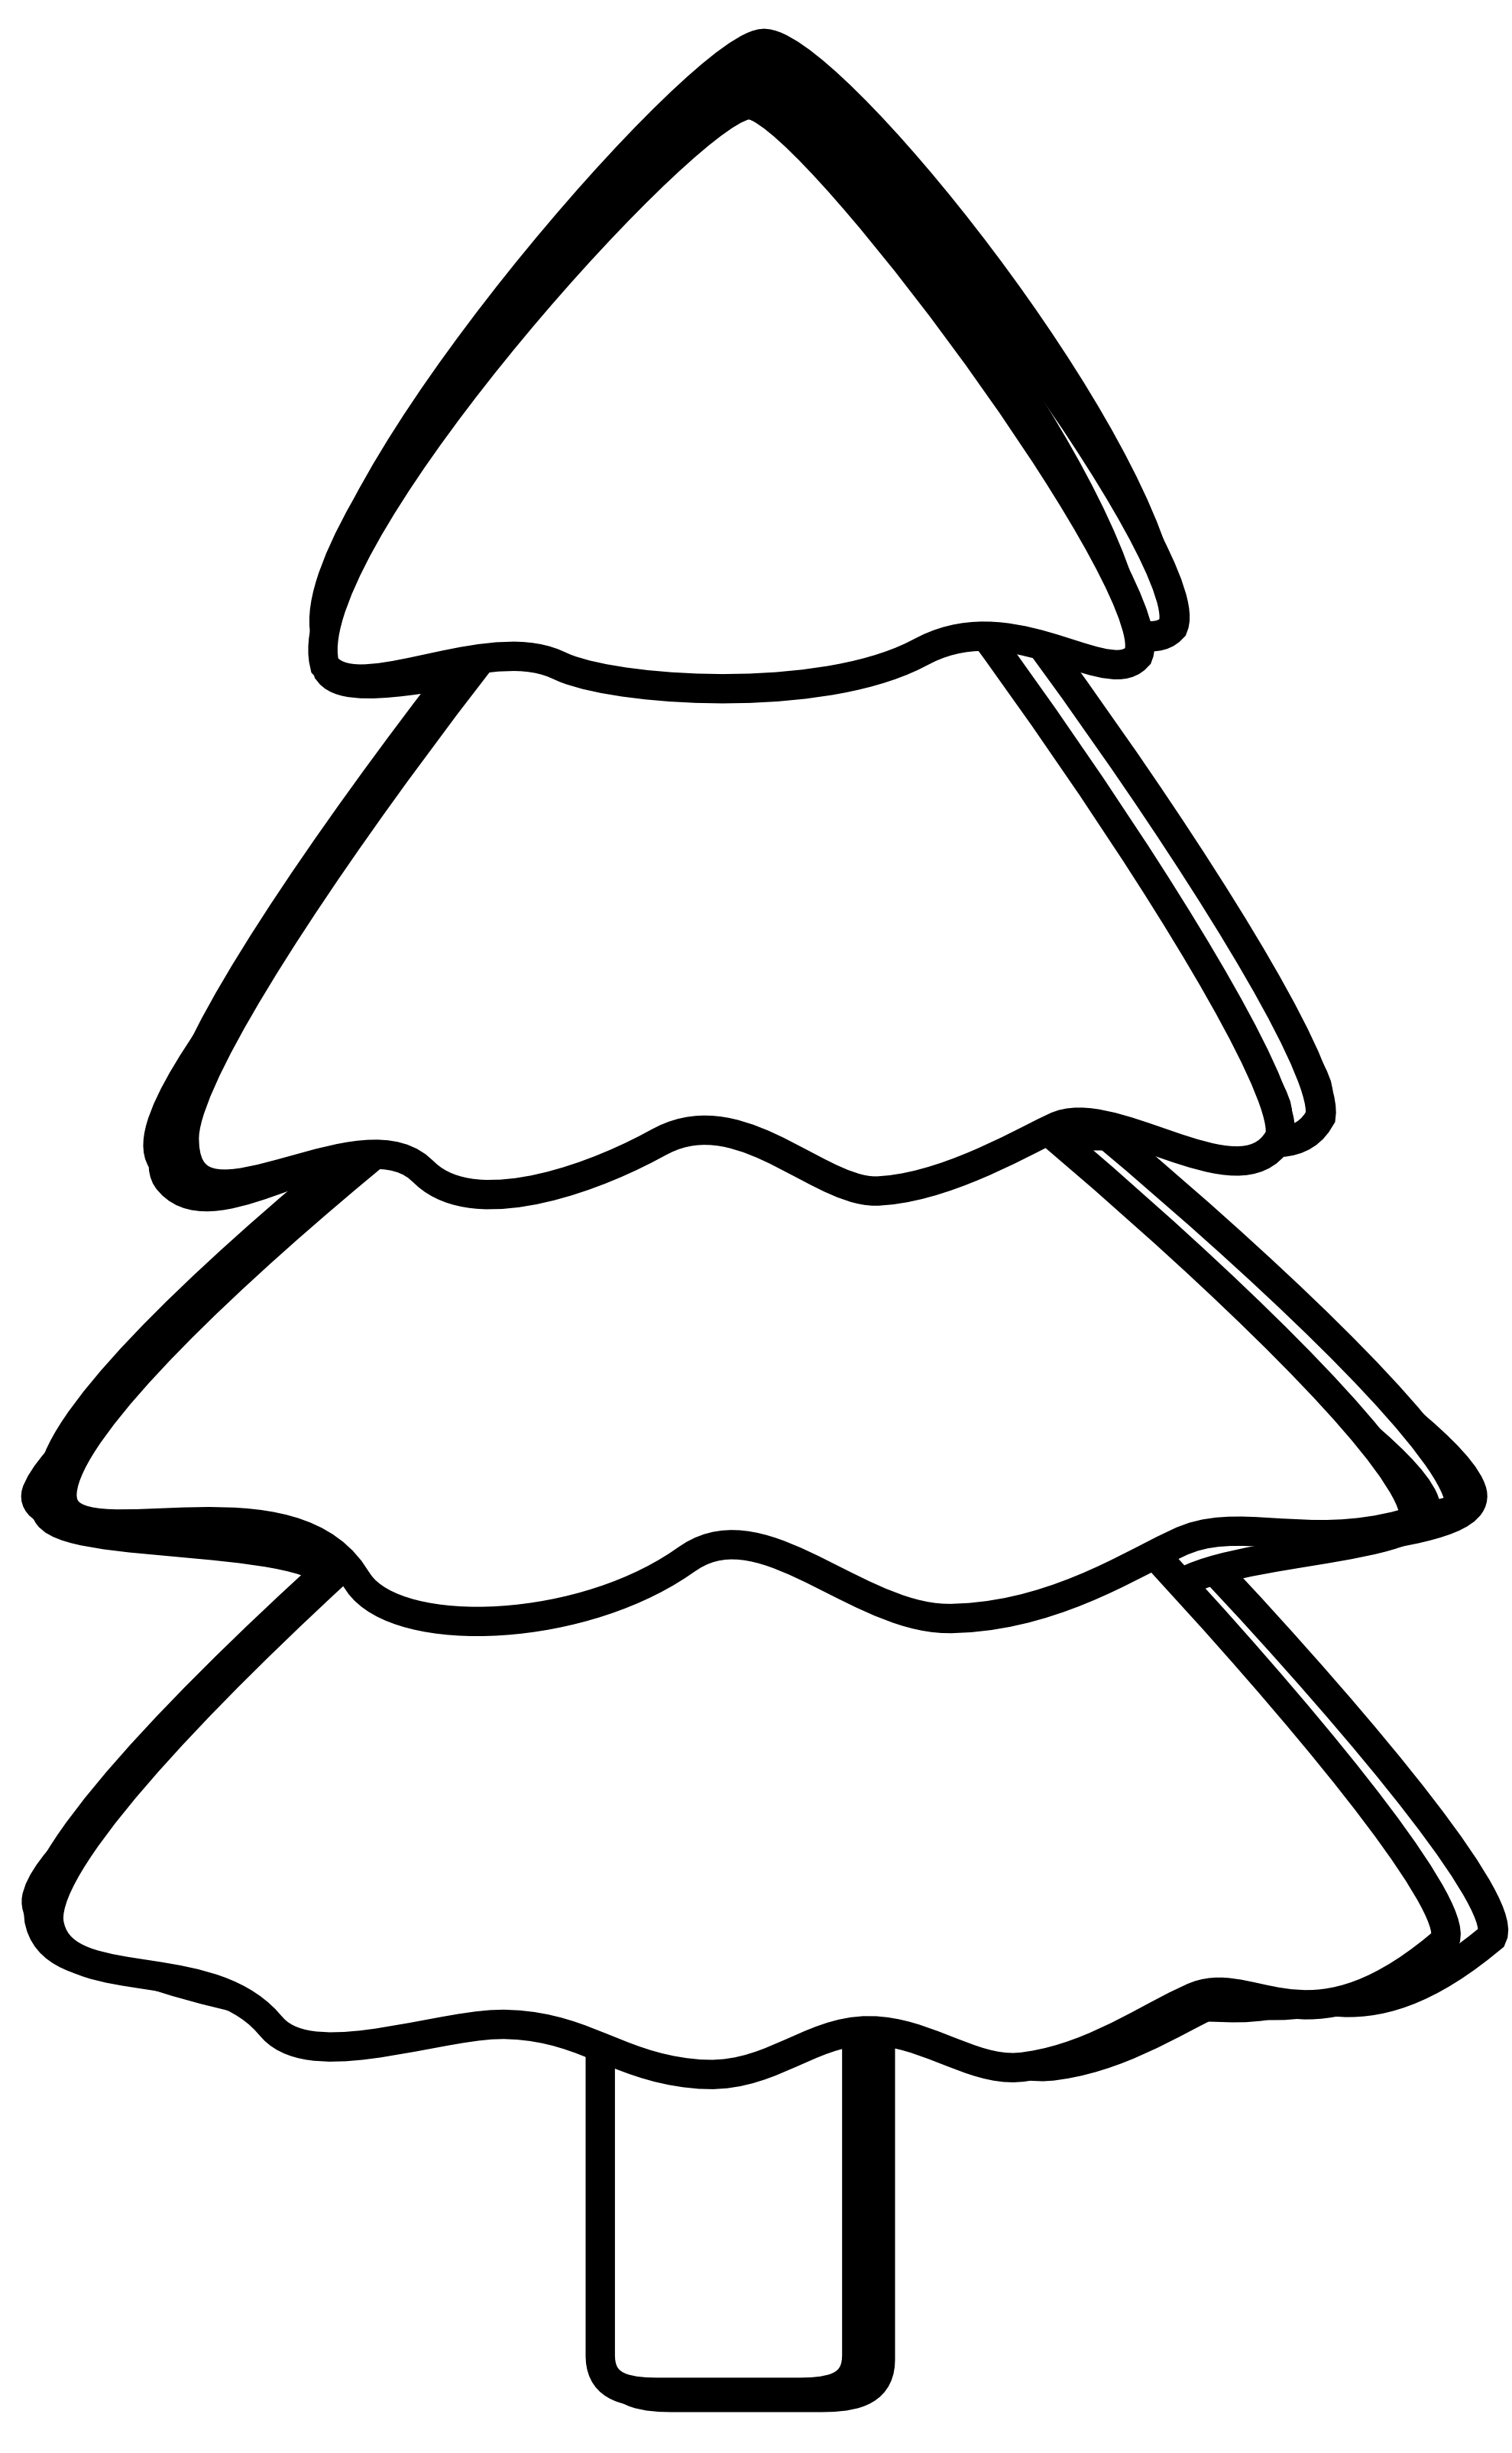 Black And White Xmas Tree Clipart